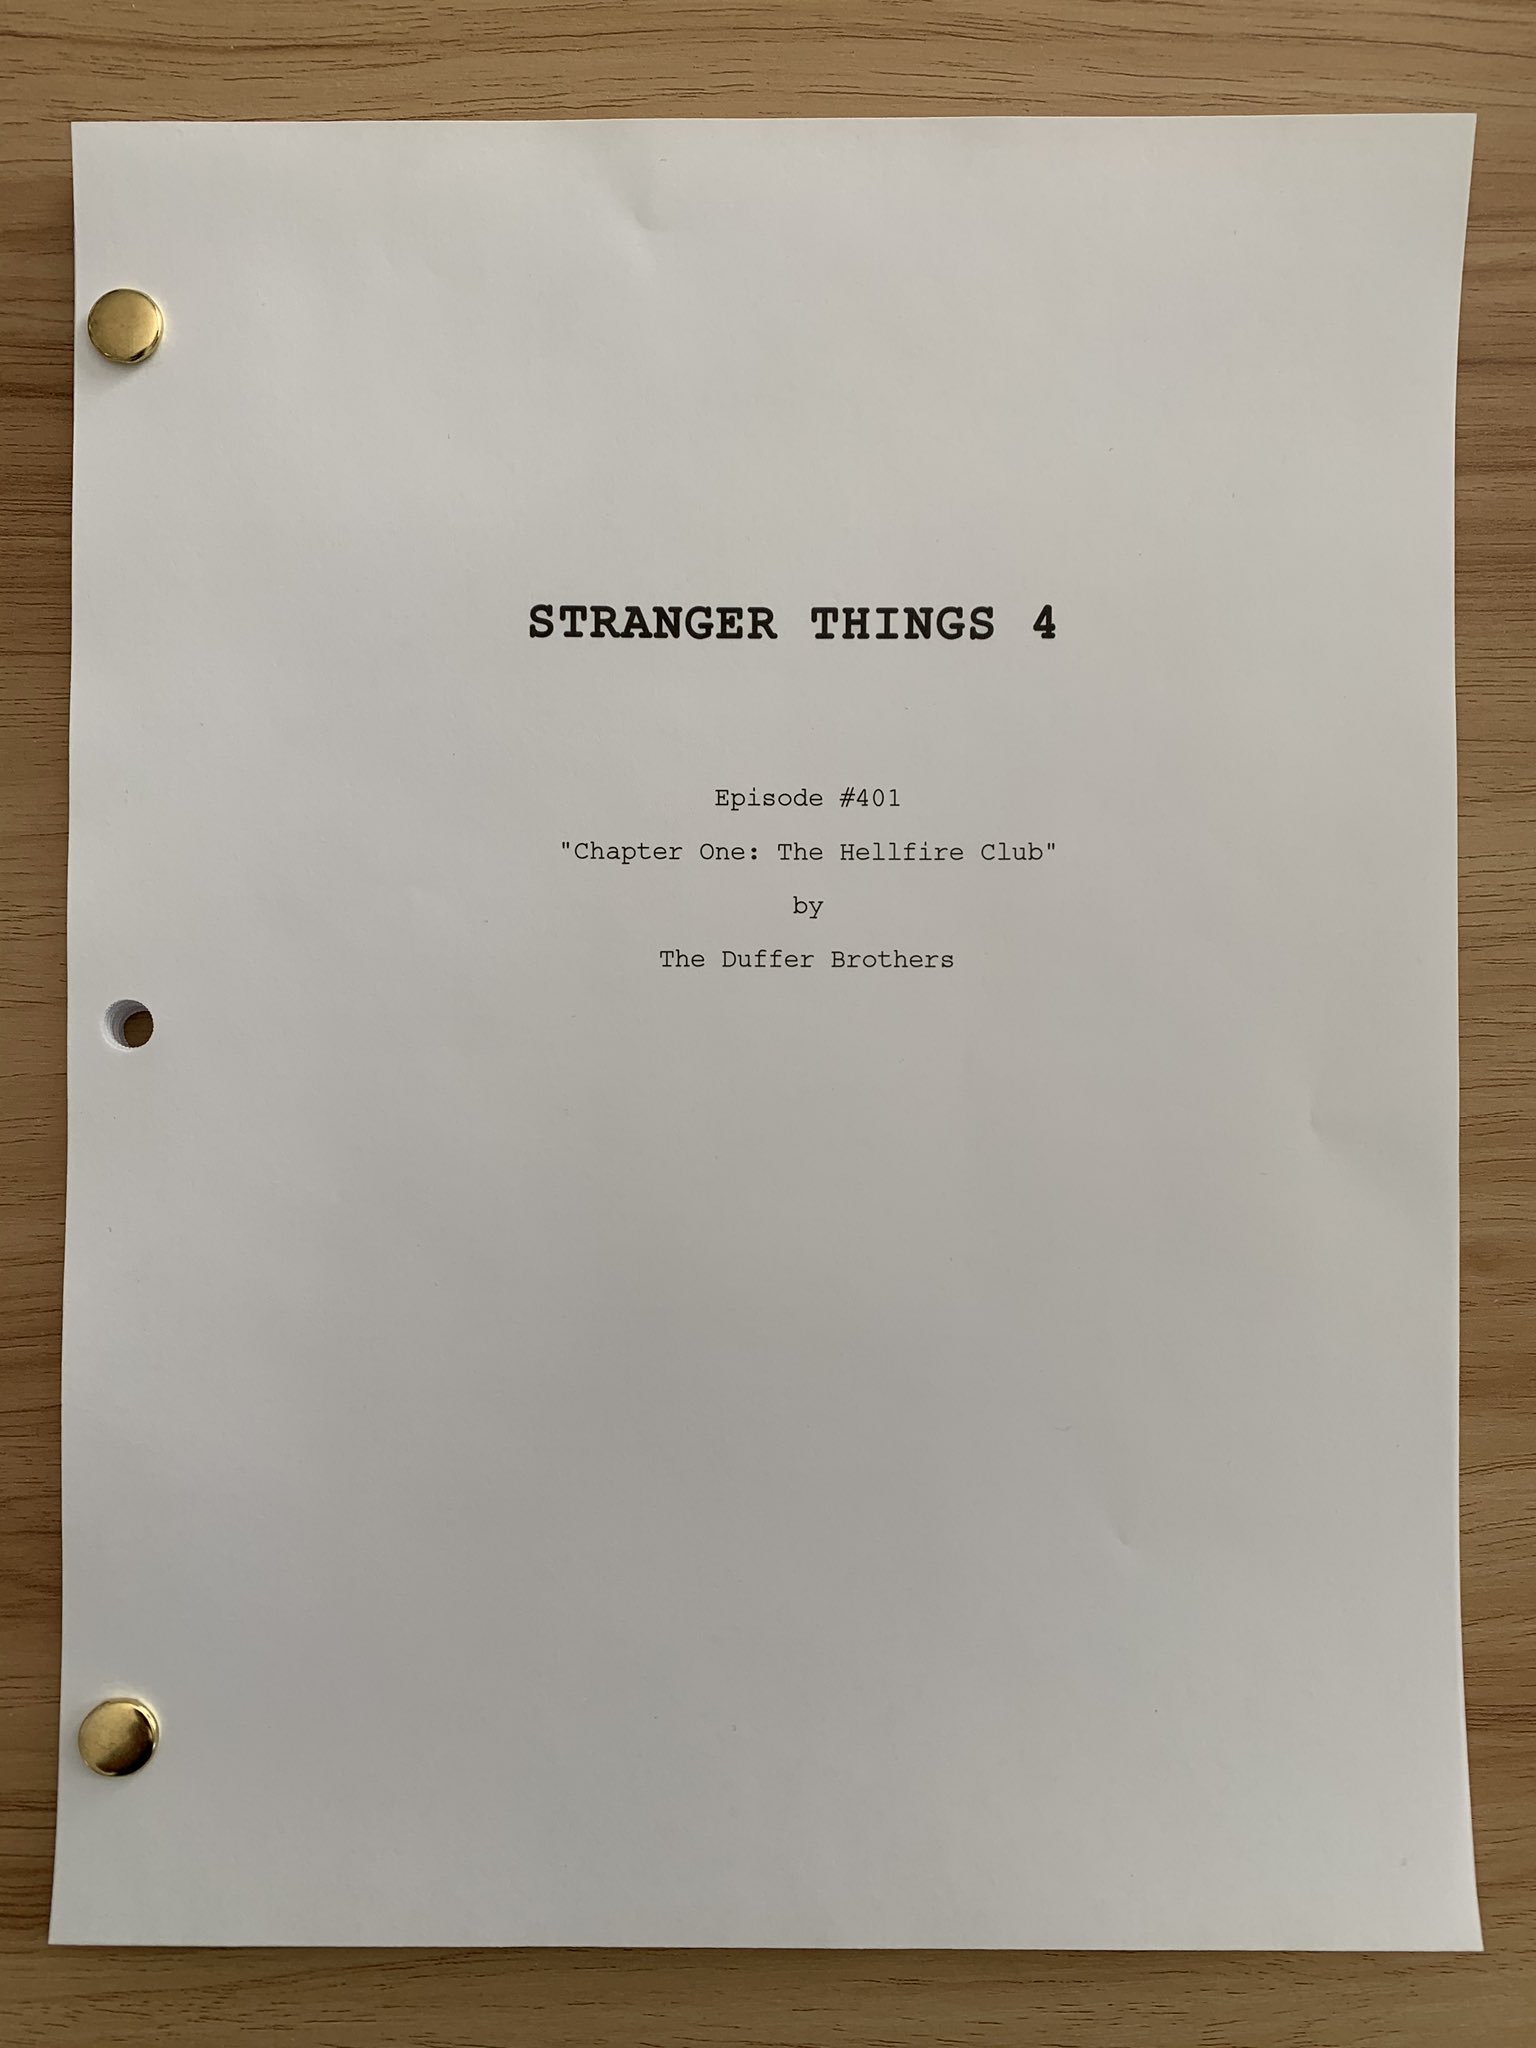 Vediamo le ultime novità dalle riprese di Stranger Things 4 Netlfix